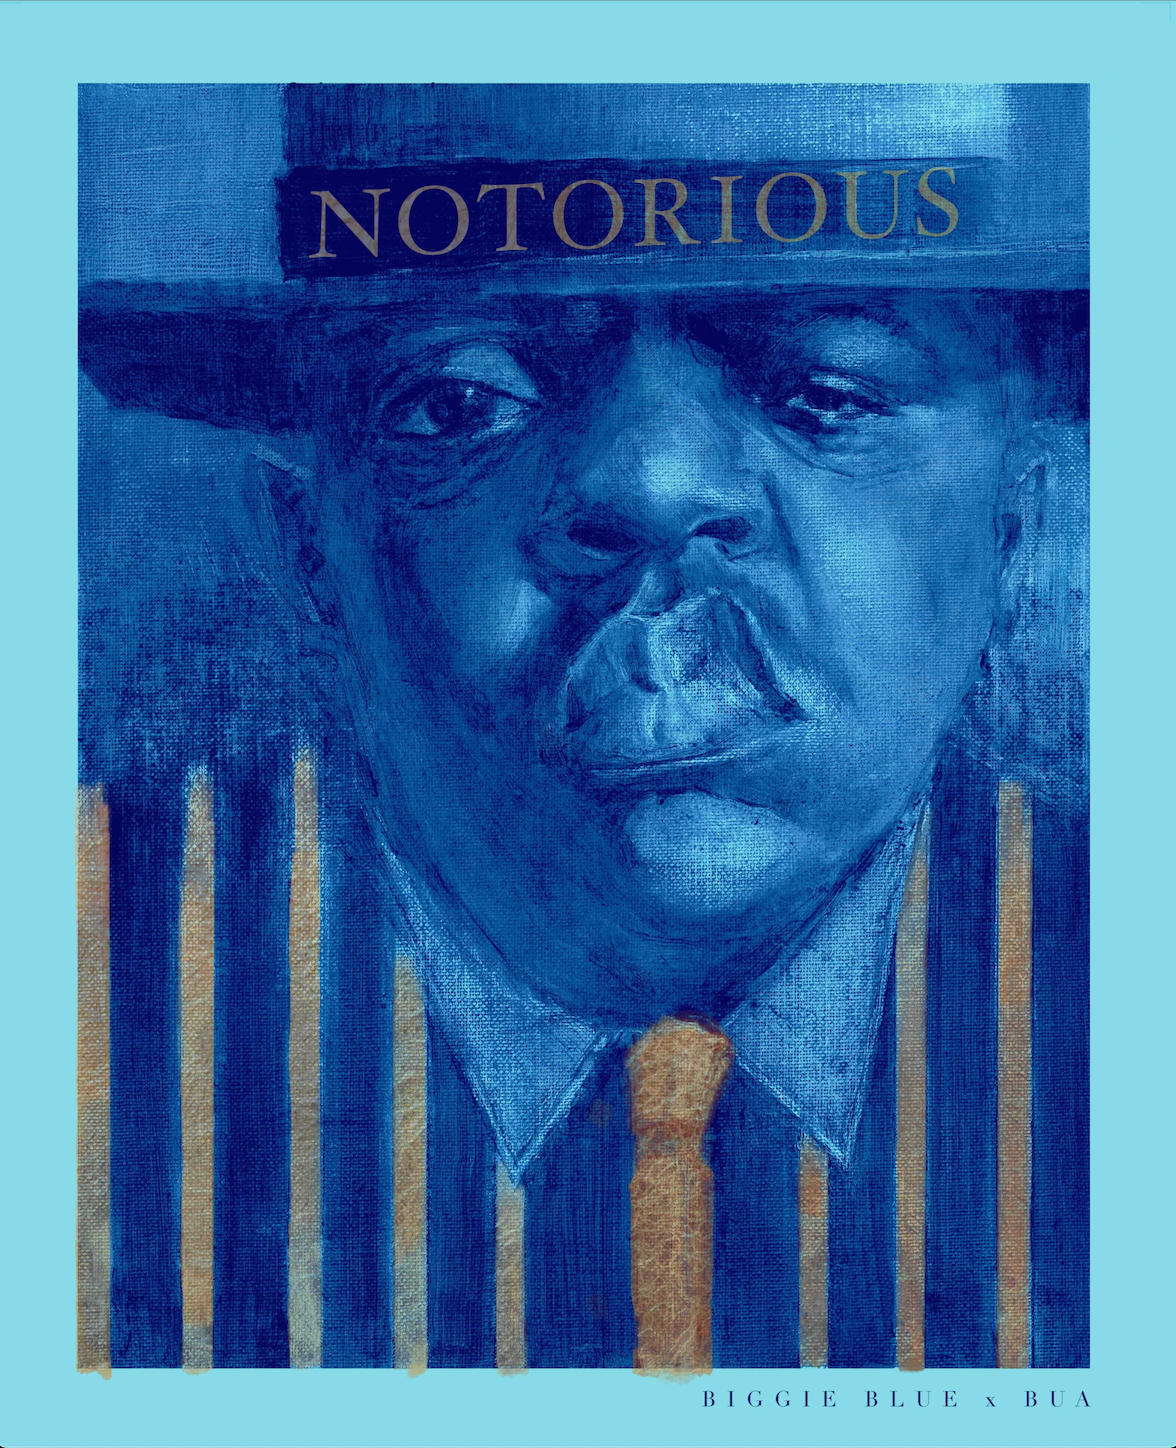 The Notorious B.I.G. Art print by urban artist Justin BUA